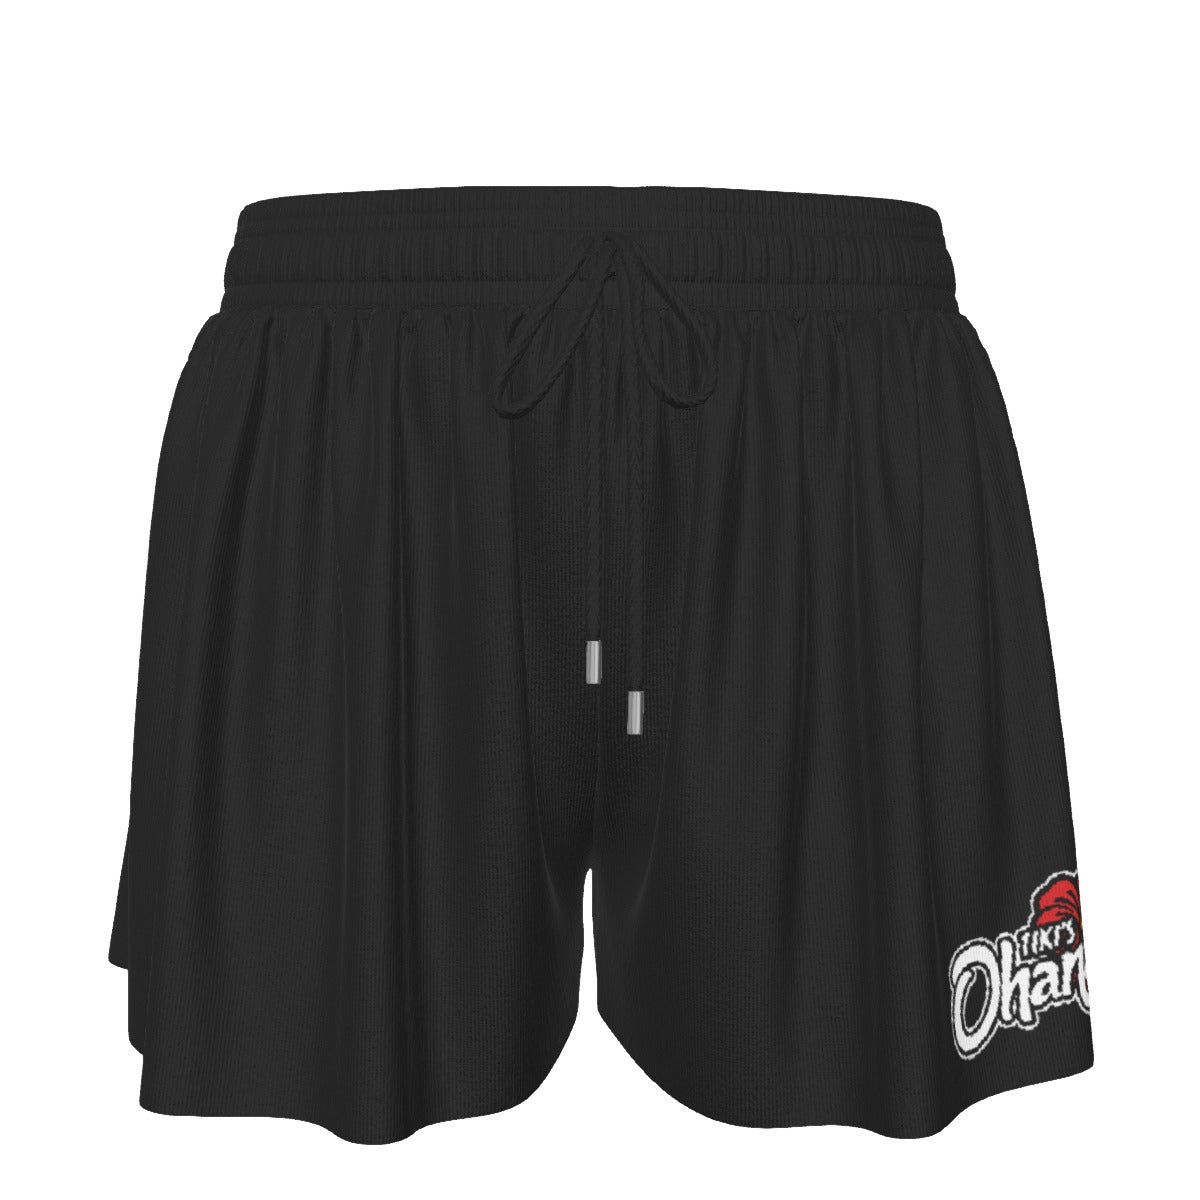 Ohana Skirt Shorts